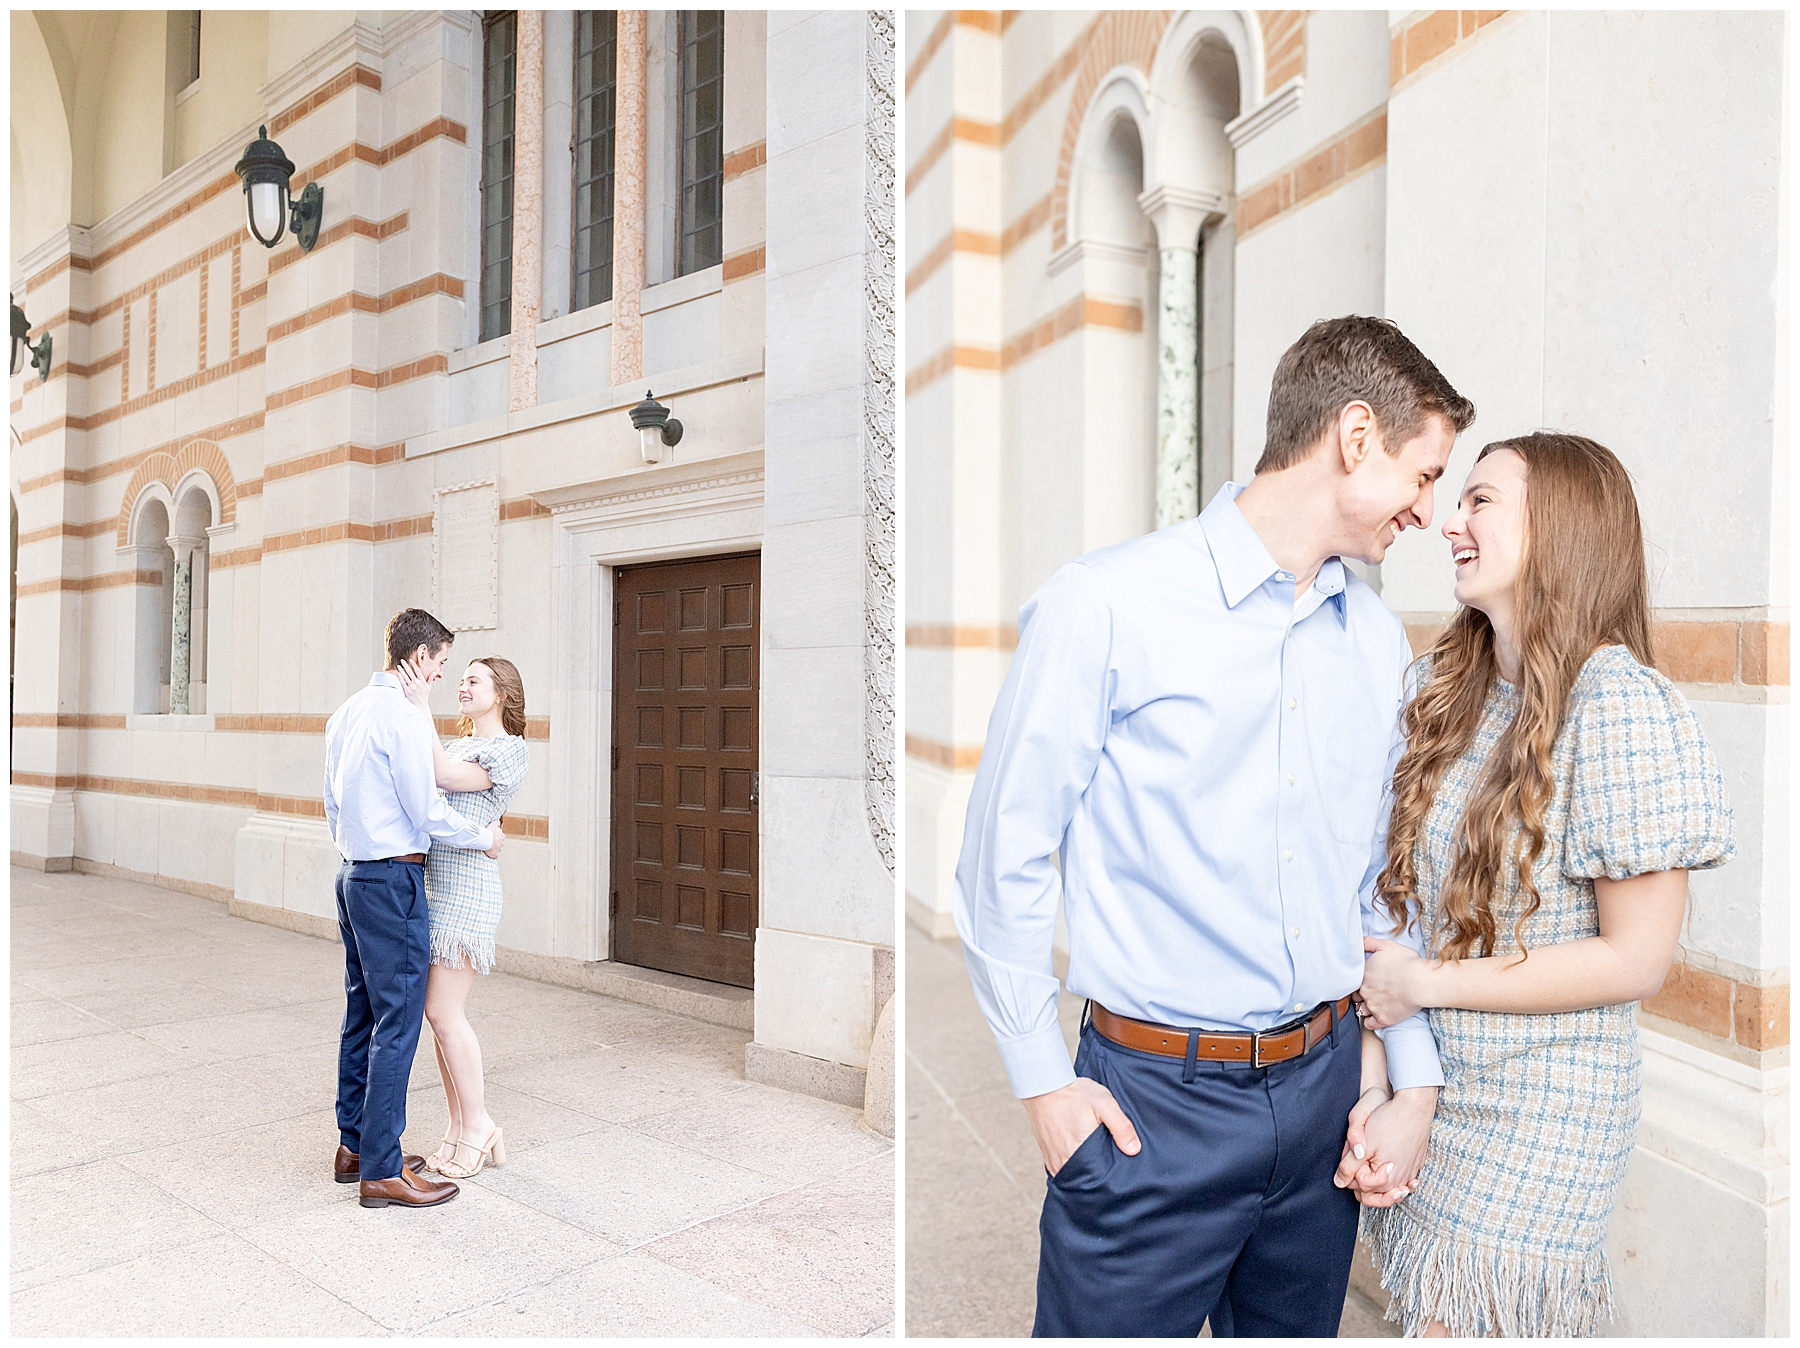 Romantic engagement portraits in Houston, TX